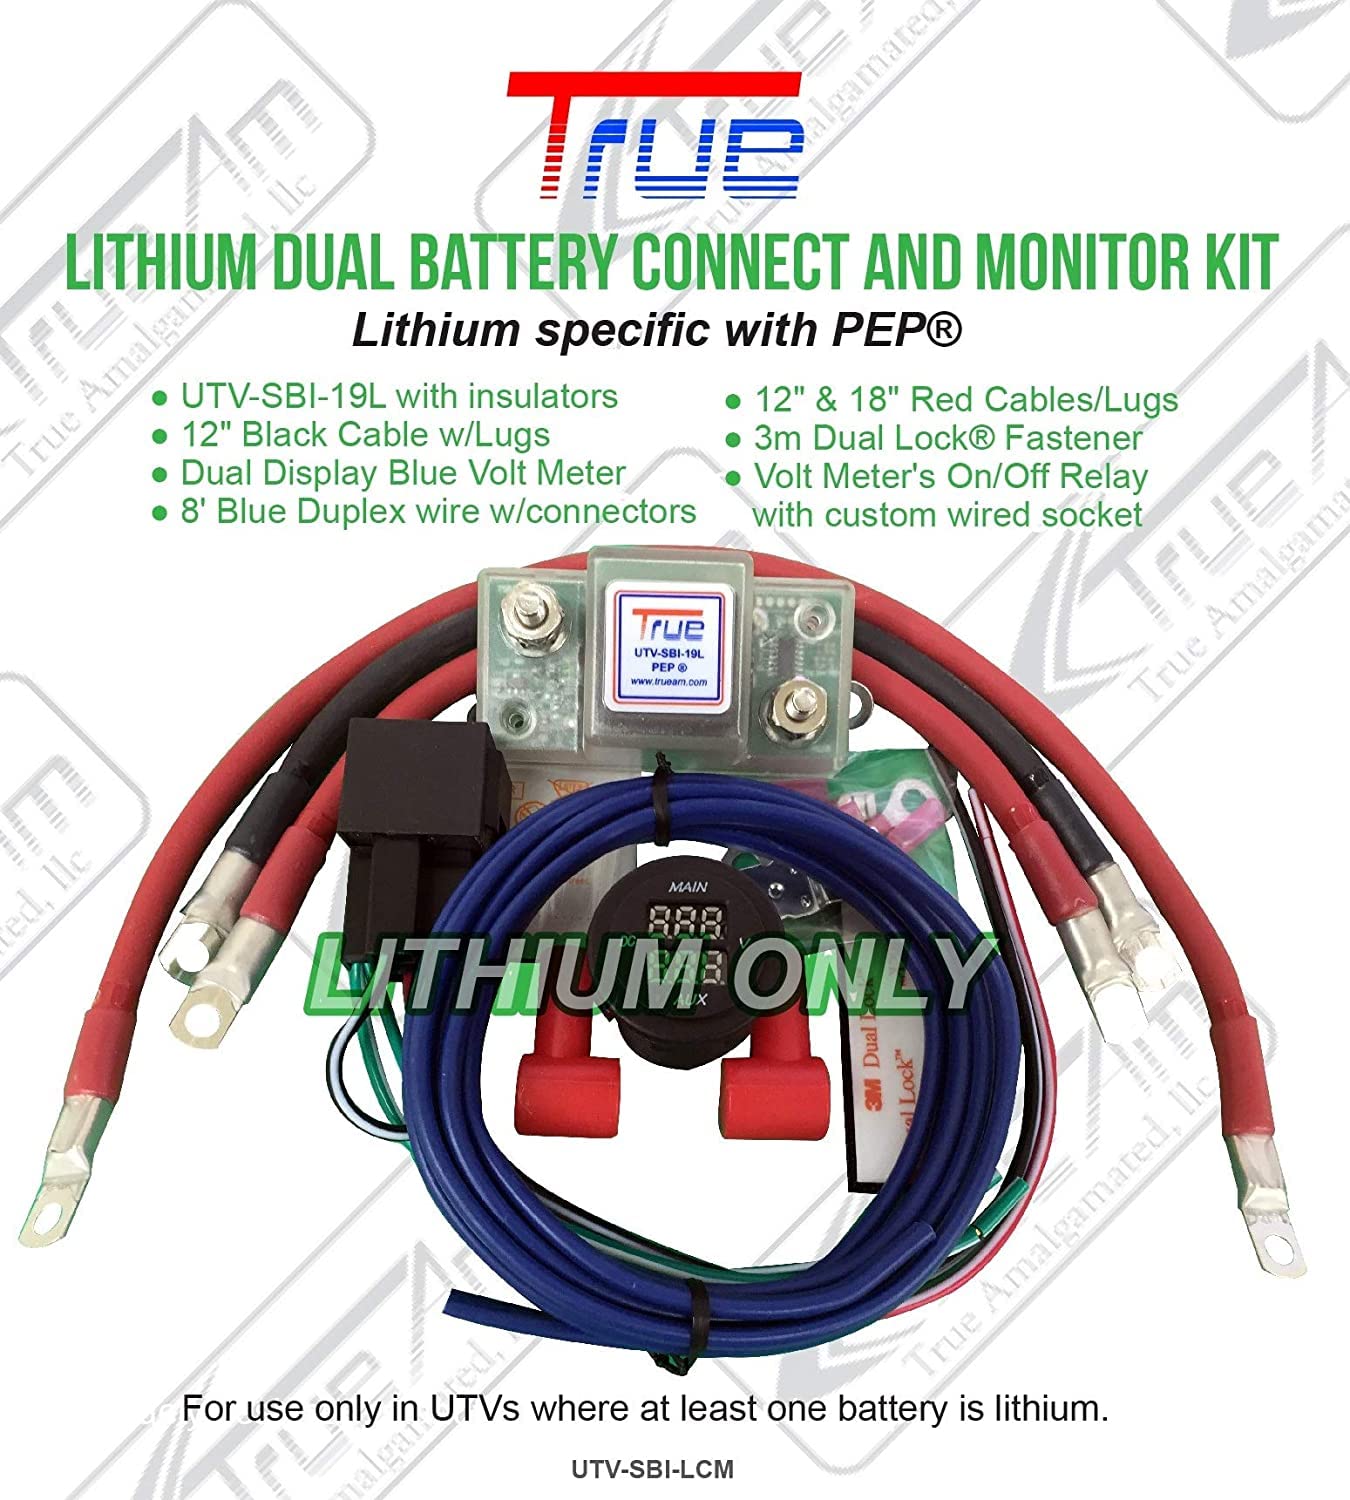 TRUE® UTV-SBI-LCM UTV Lithium Dual Battery Connect & Monitor Kit